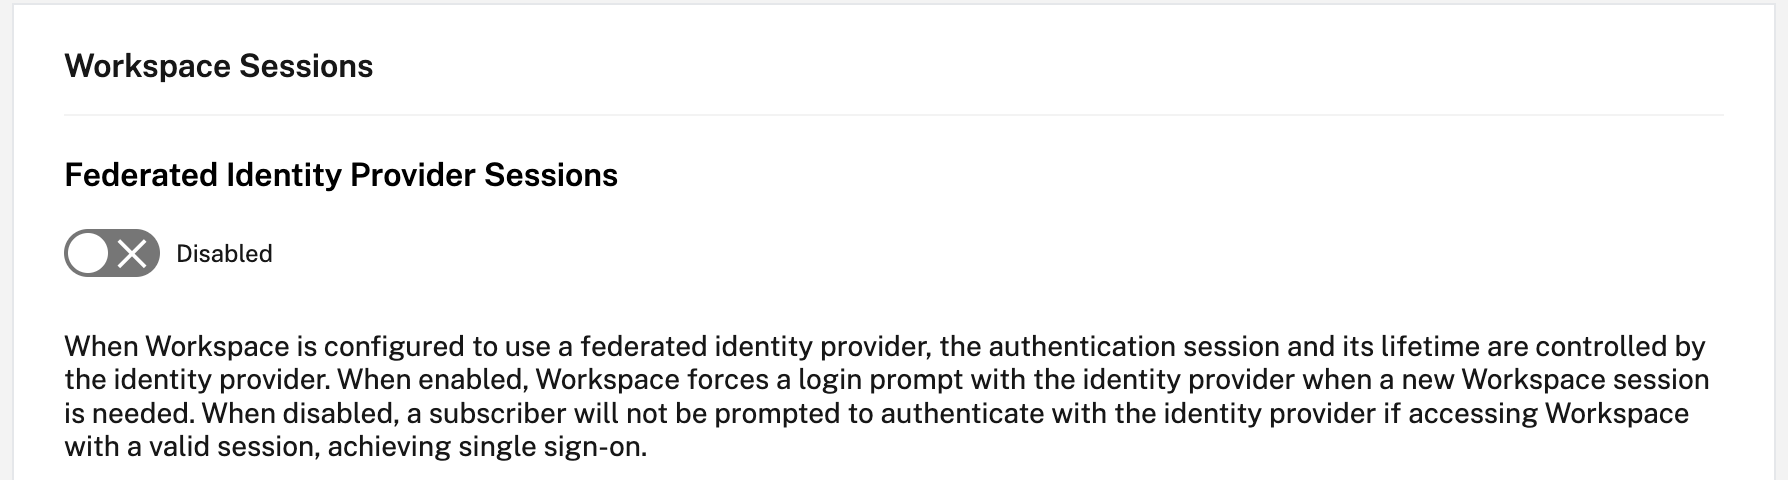 Federated Identity Provider